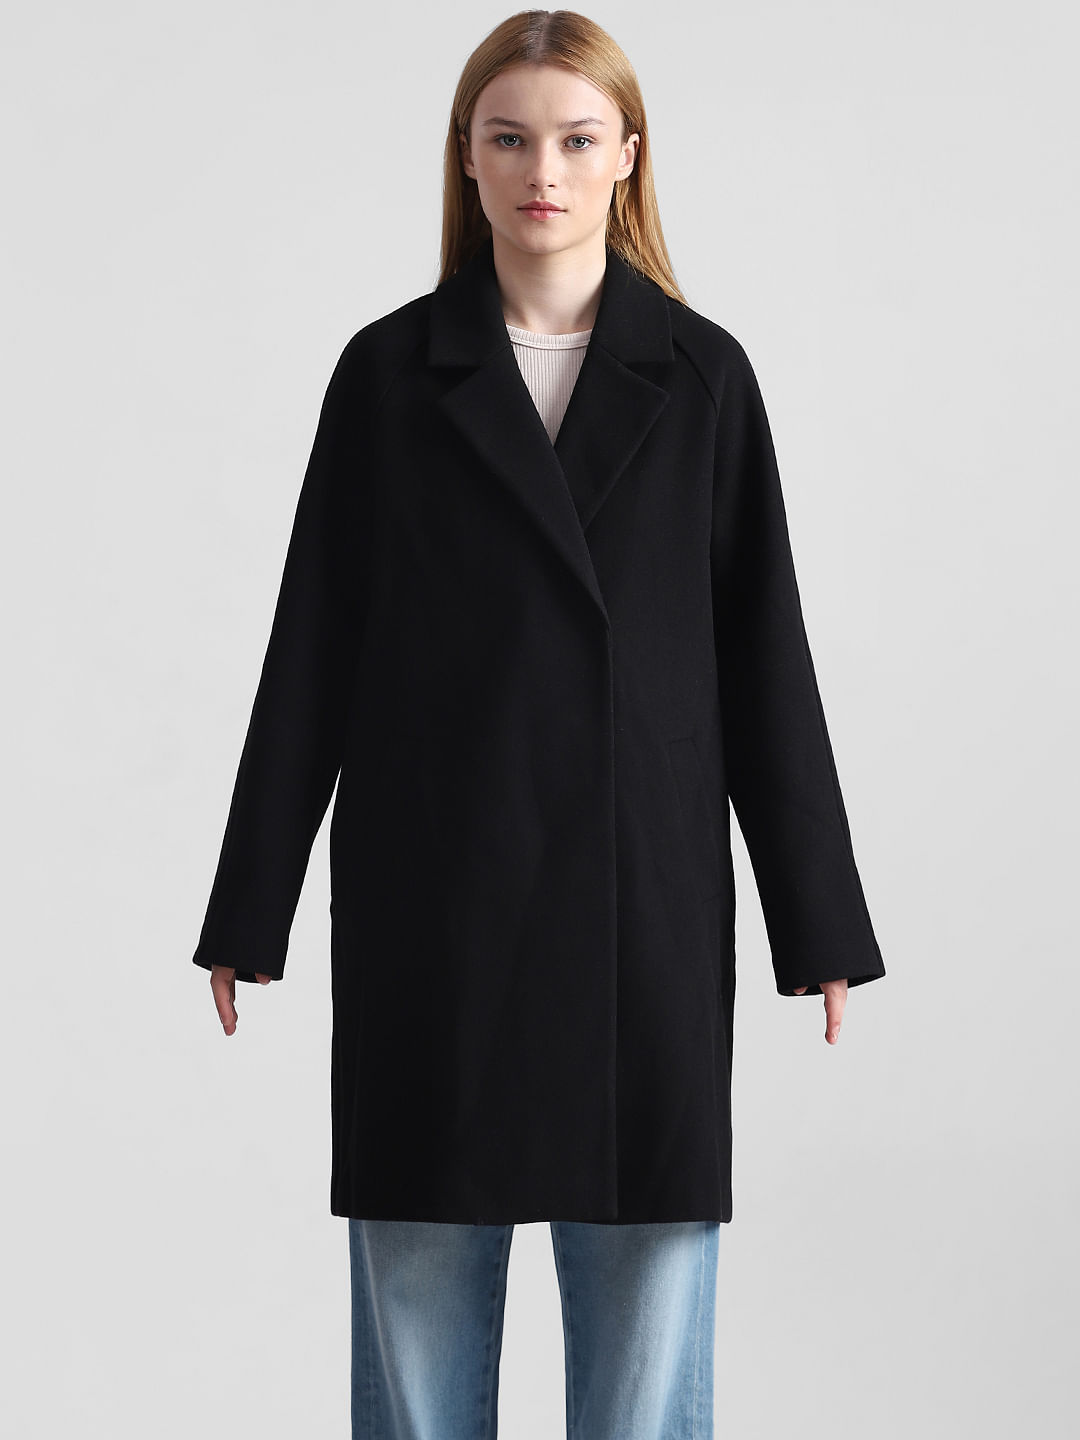 Buy ESSENTIELE esssentiele semi long coats at Amazon.in